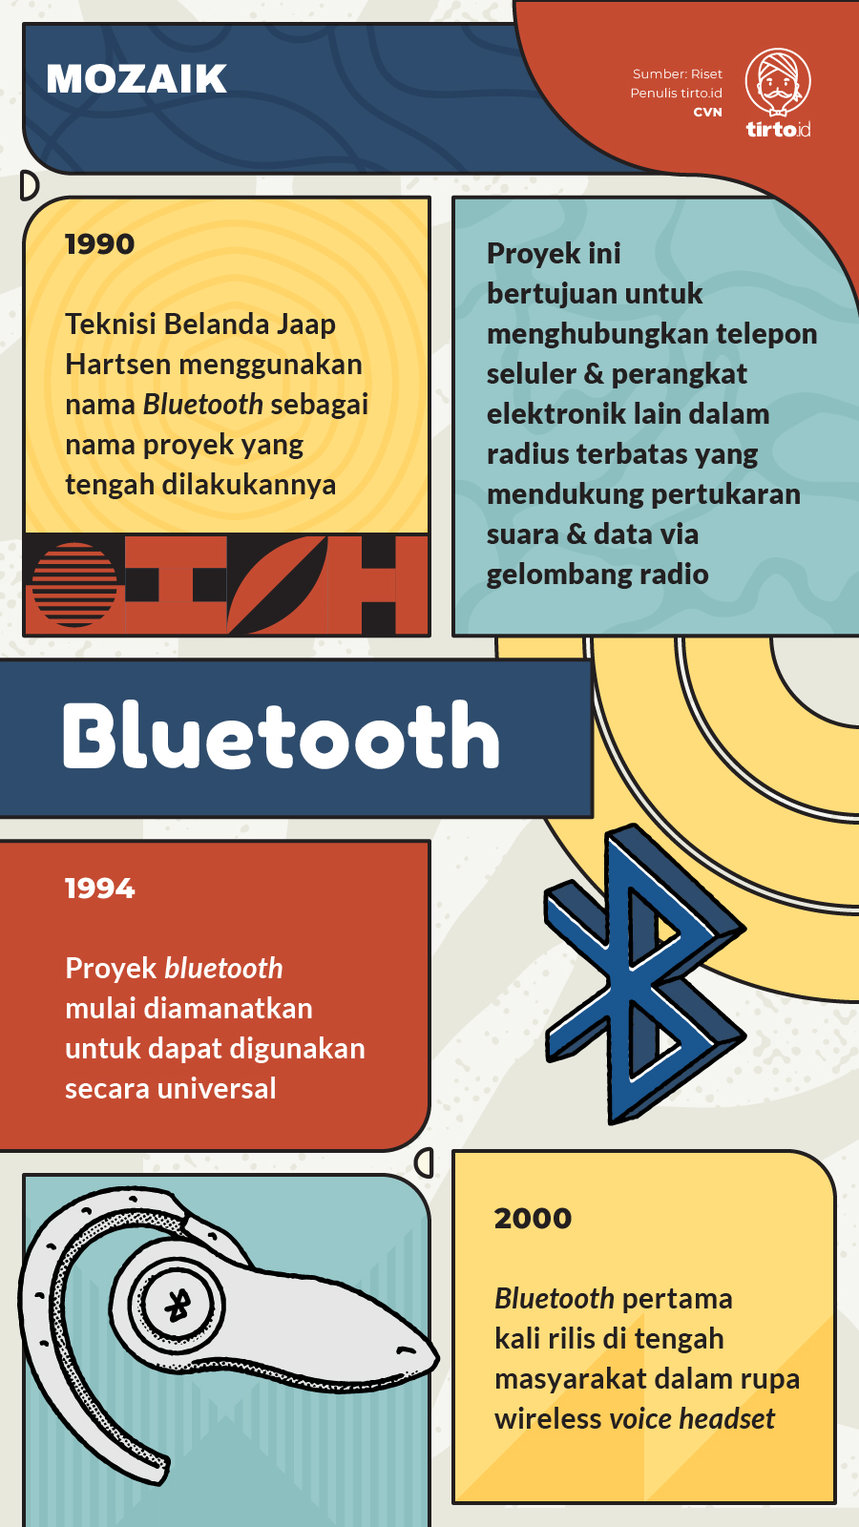 Infografik Mozaik Bluetooth